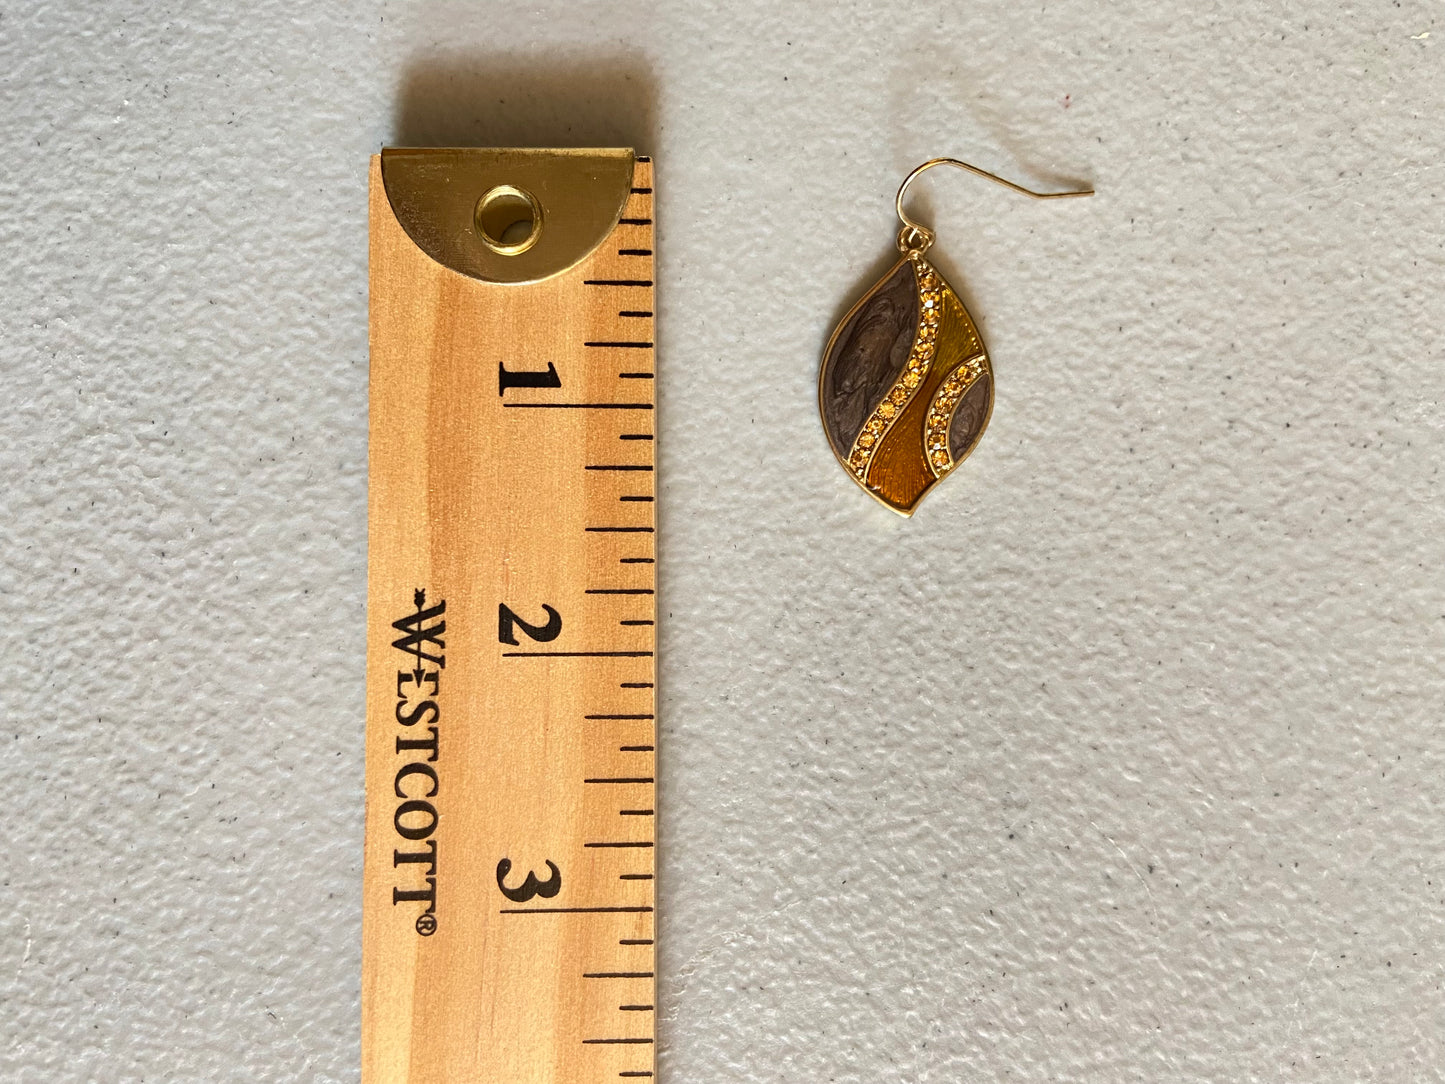 Gold Tone Metal Leaf Necklace/ Earrings Set